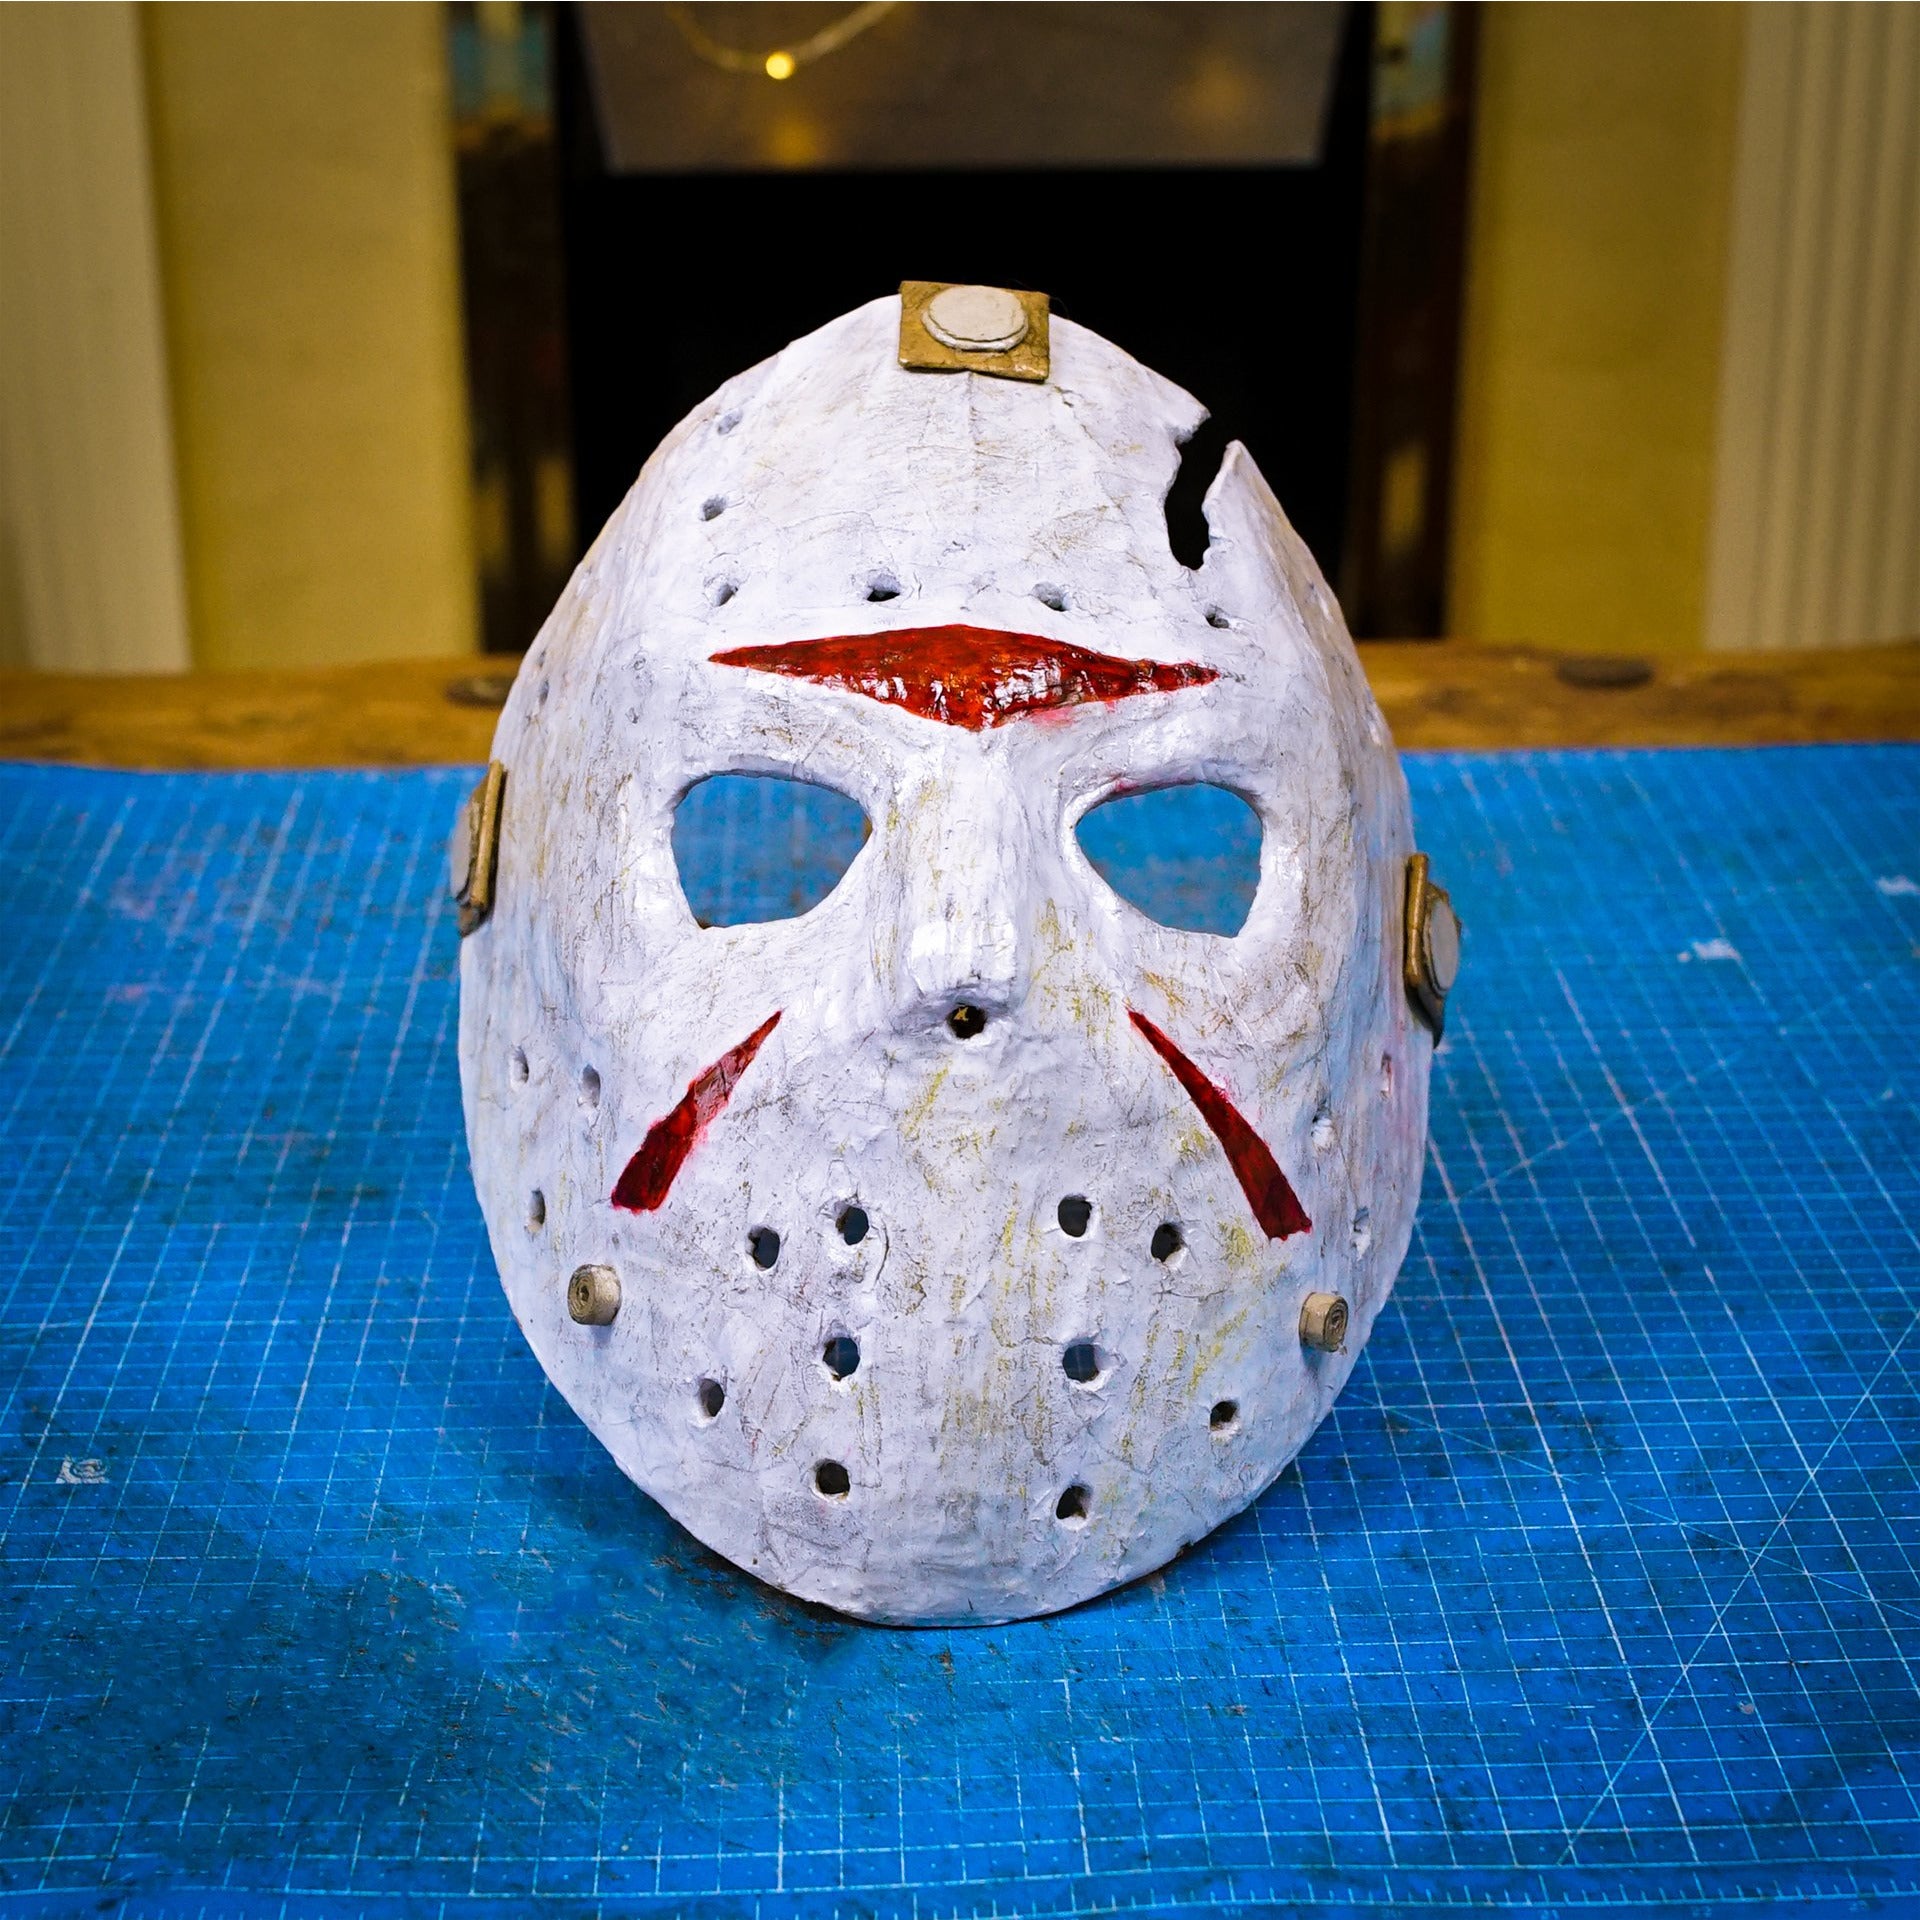 Jason Voorhees Mask for cardboard DIY – Epic Cardboard Props